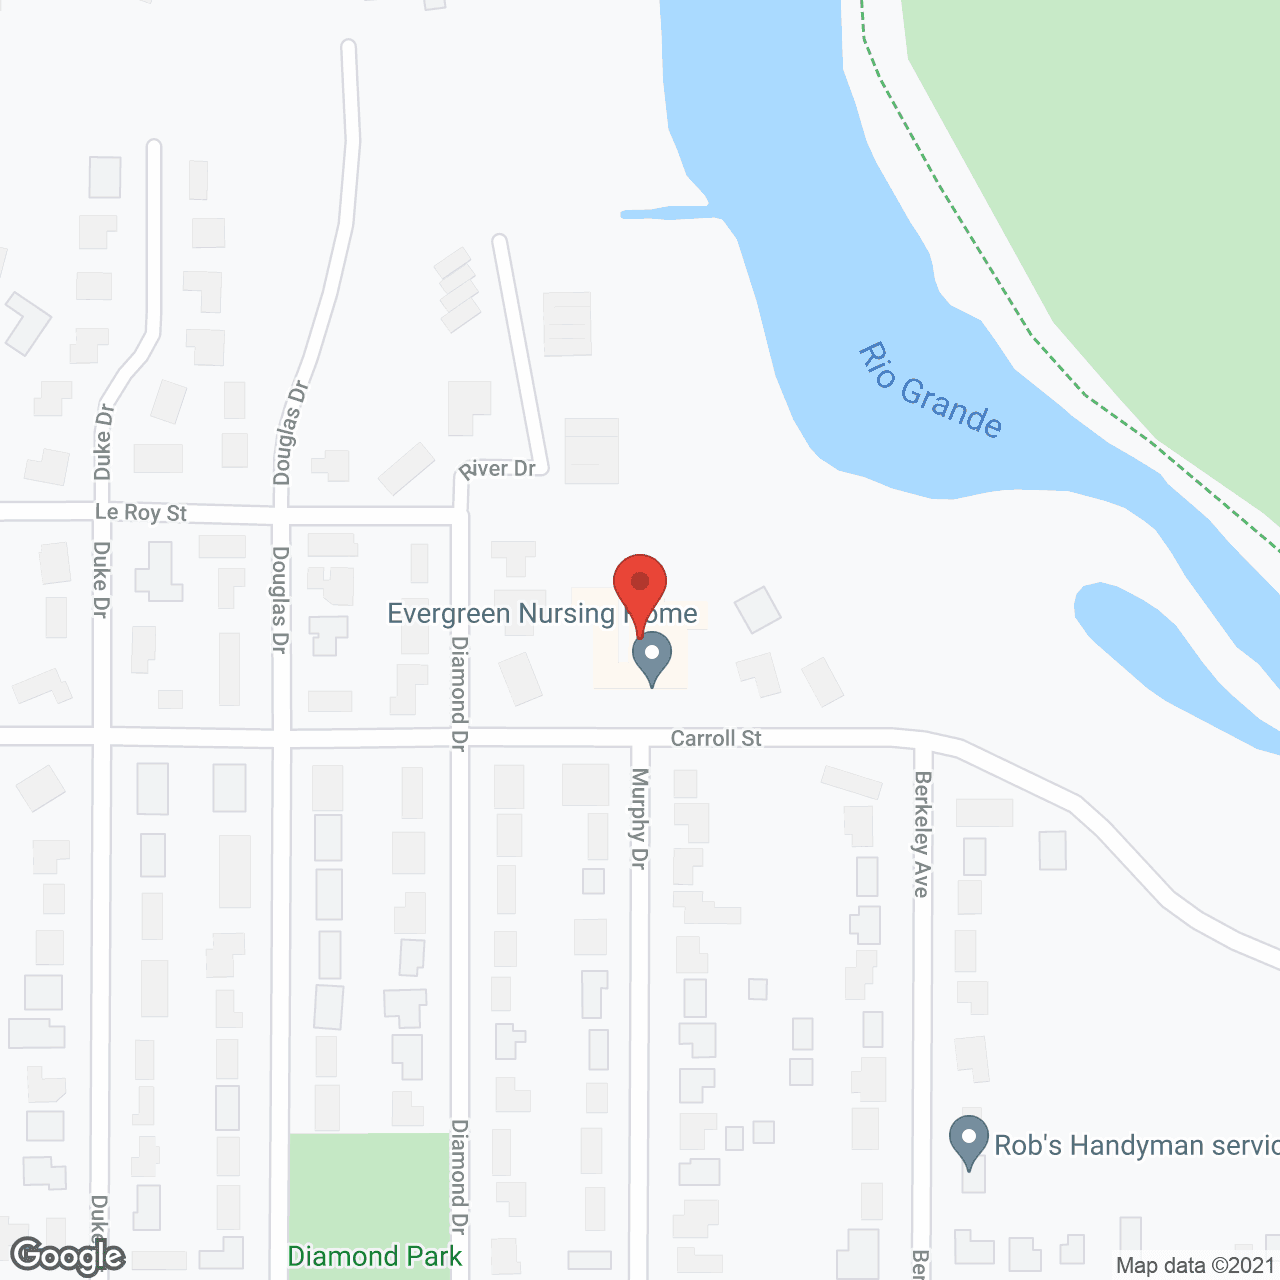 Evergreen Nursing Home in google map